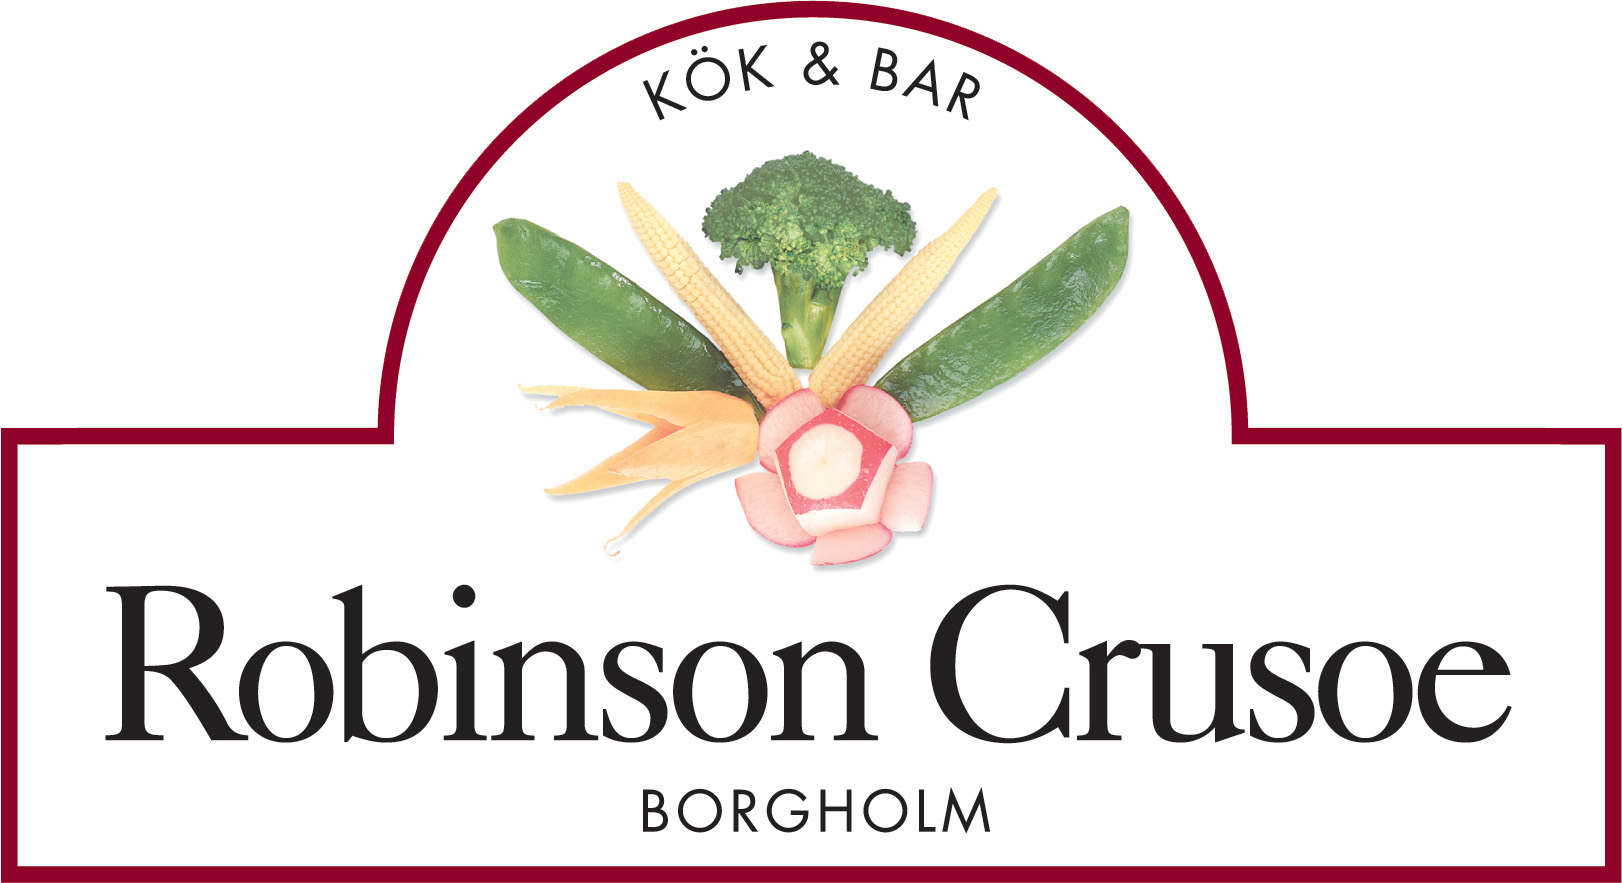 Robinson Crusoe - Borgholm